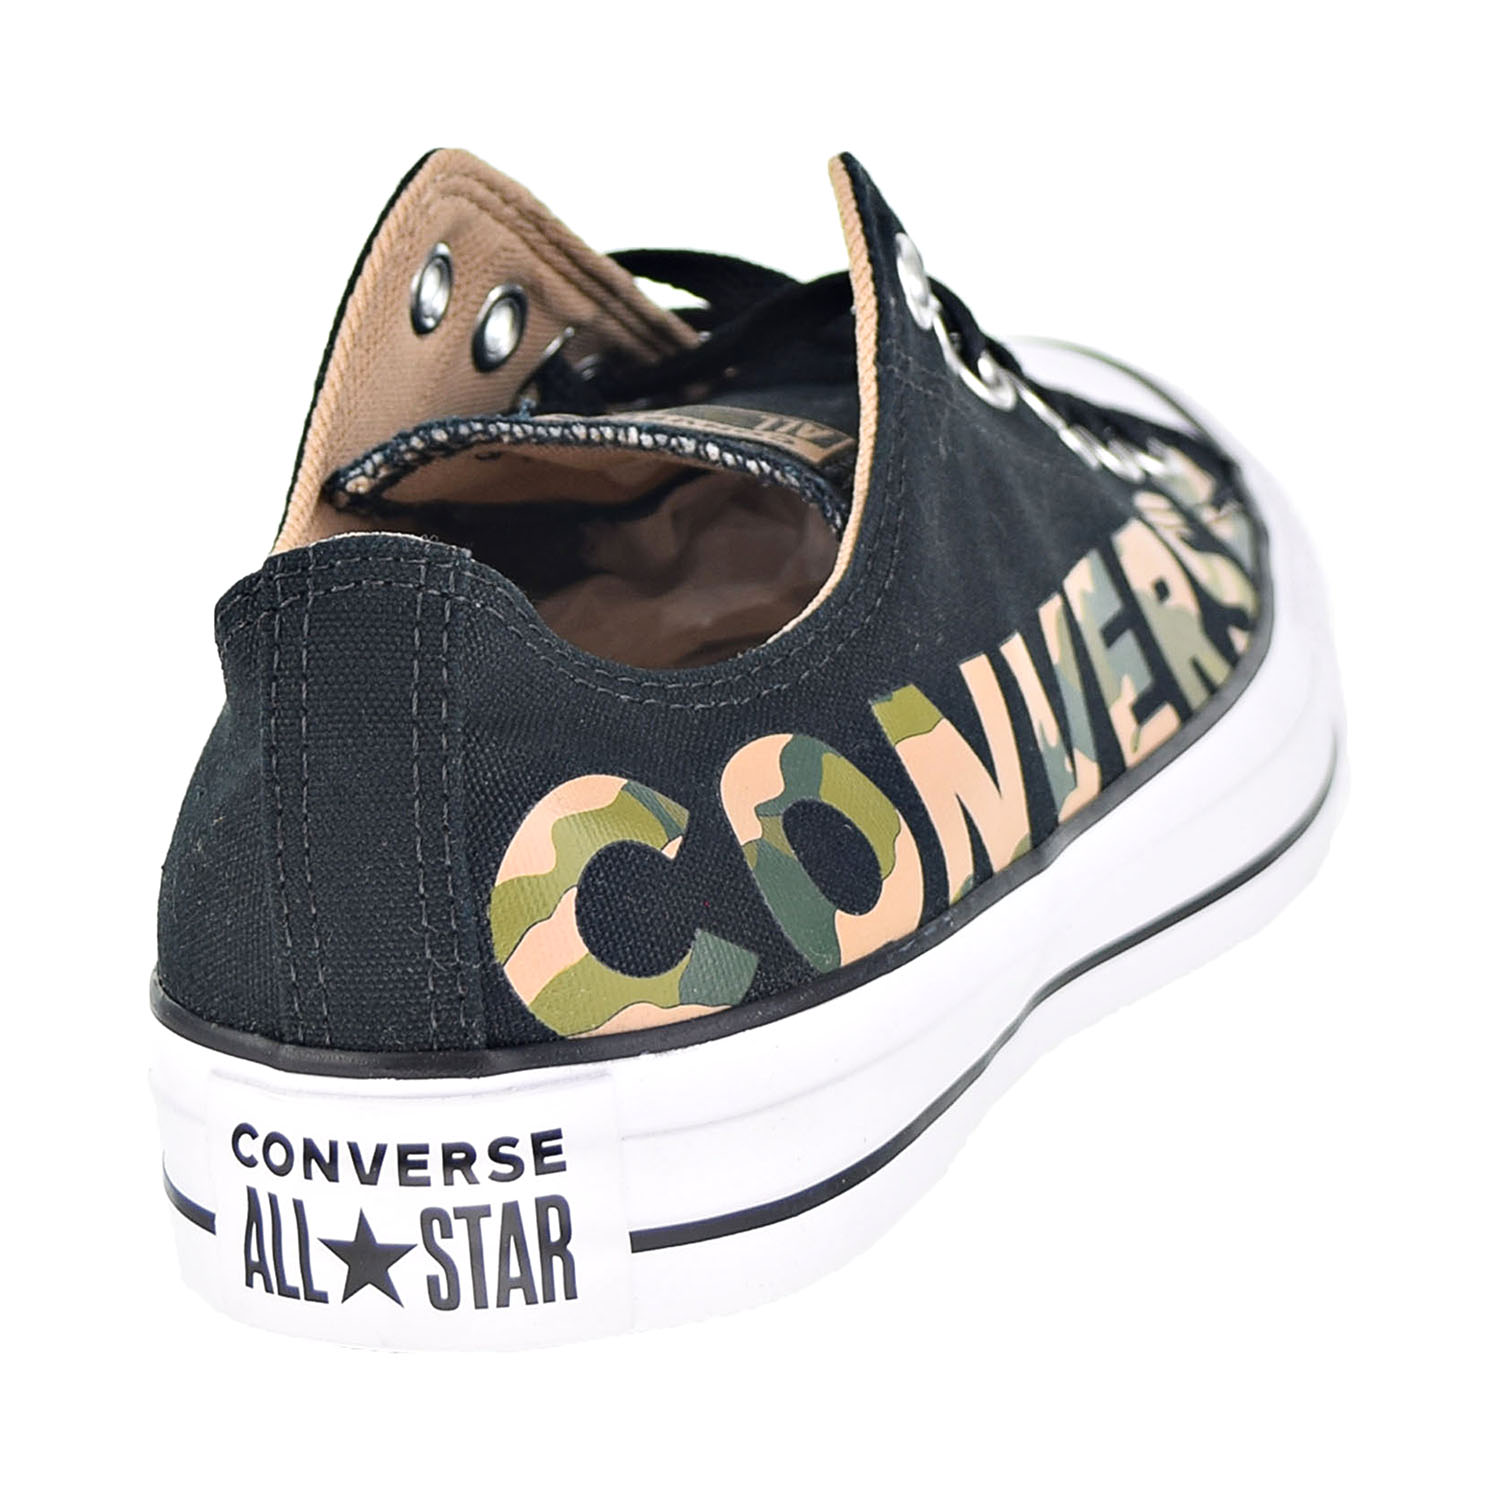 Converse Chuck Taylor All Star Ox "Camo Print" Men's Shoes Black-Multi-White 166234f - image 3 of 6